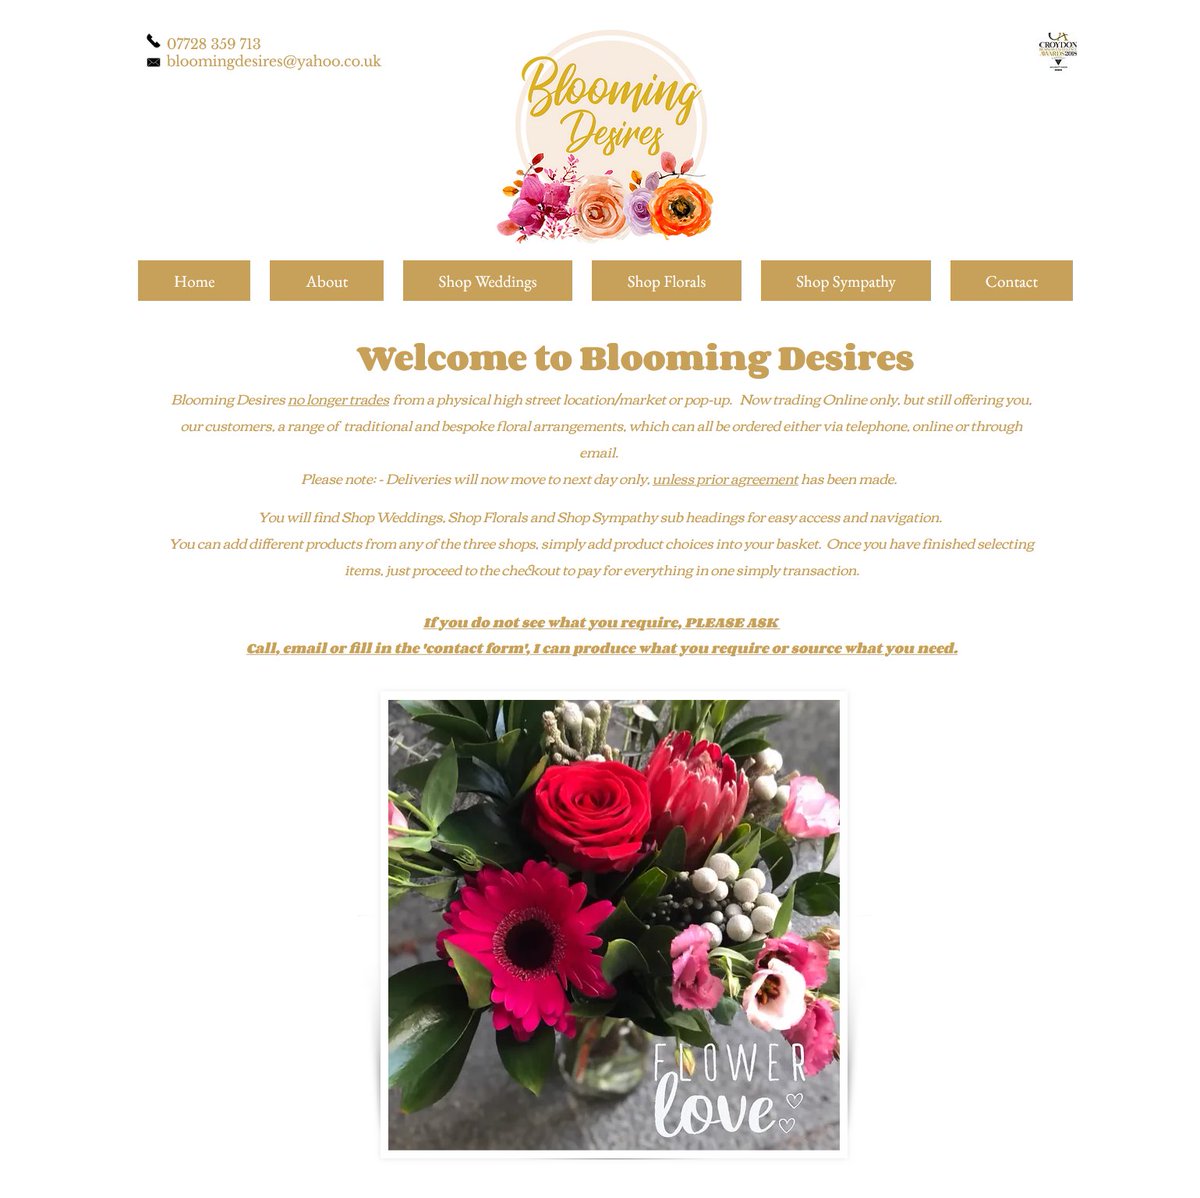 Need flowers or plants? Visit Blooming Desires! bloomingdesires.com 
#Norwood #Croydon #London #florist #SE25 #flowers #plants #southnorwood